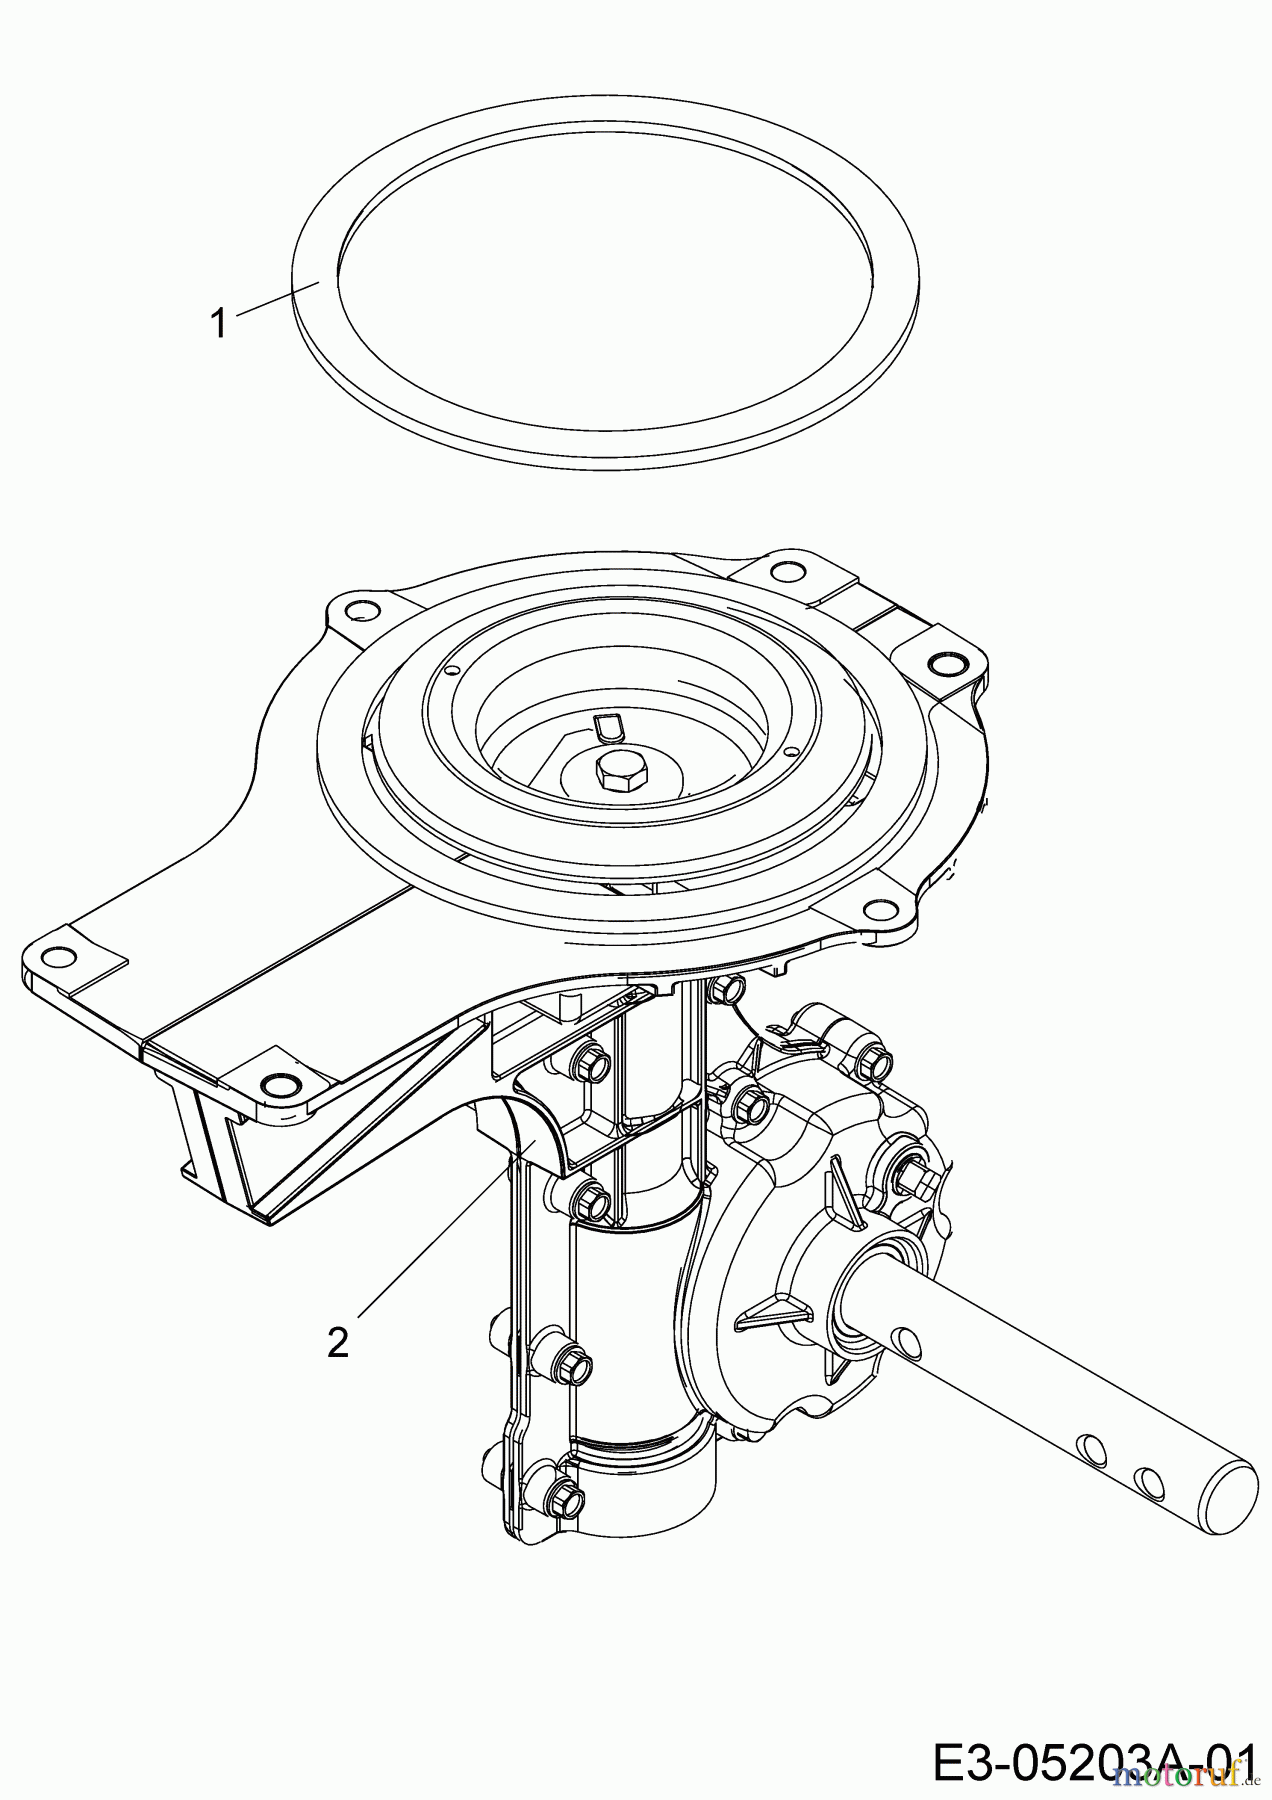  Wolf-Garten Motorhacken T 61 B 21A-252C650  (2013) Getriebe